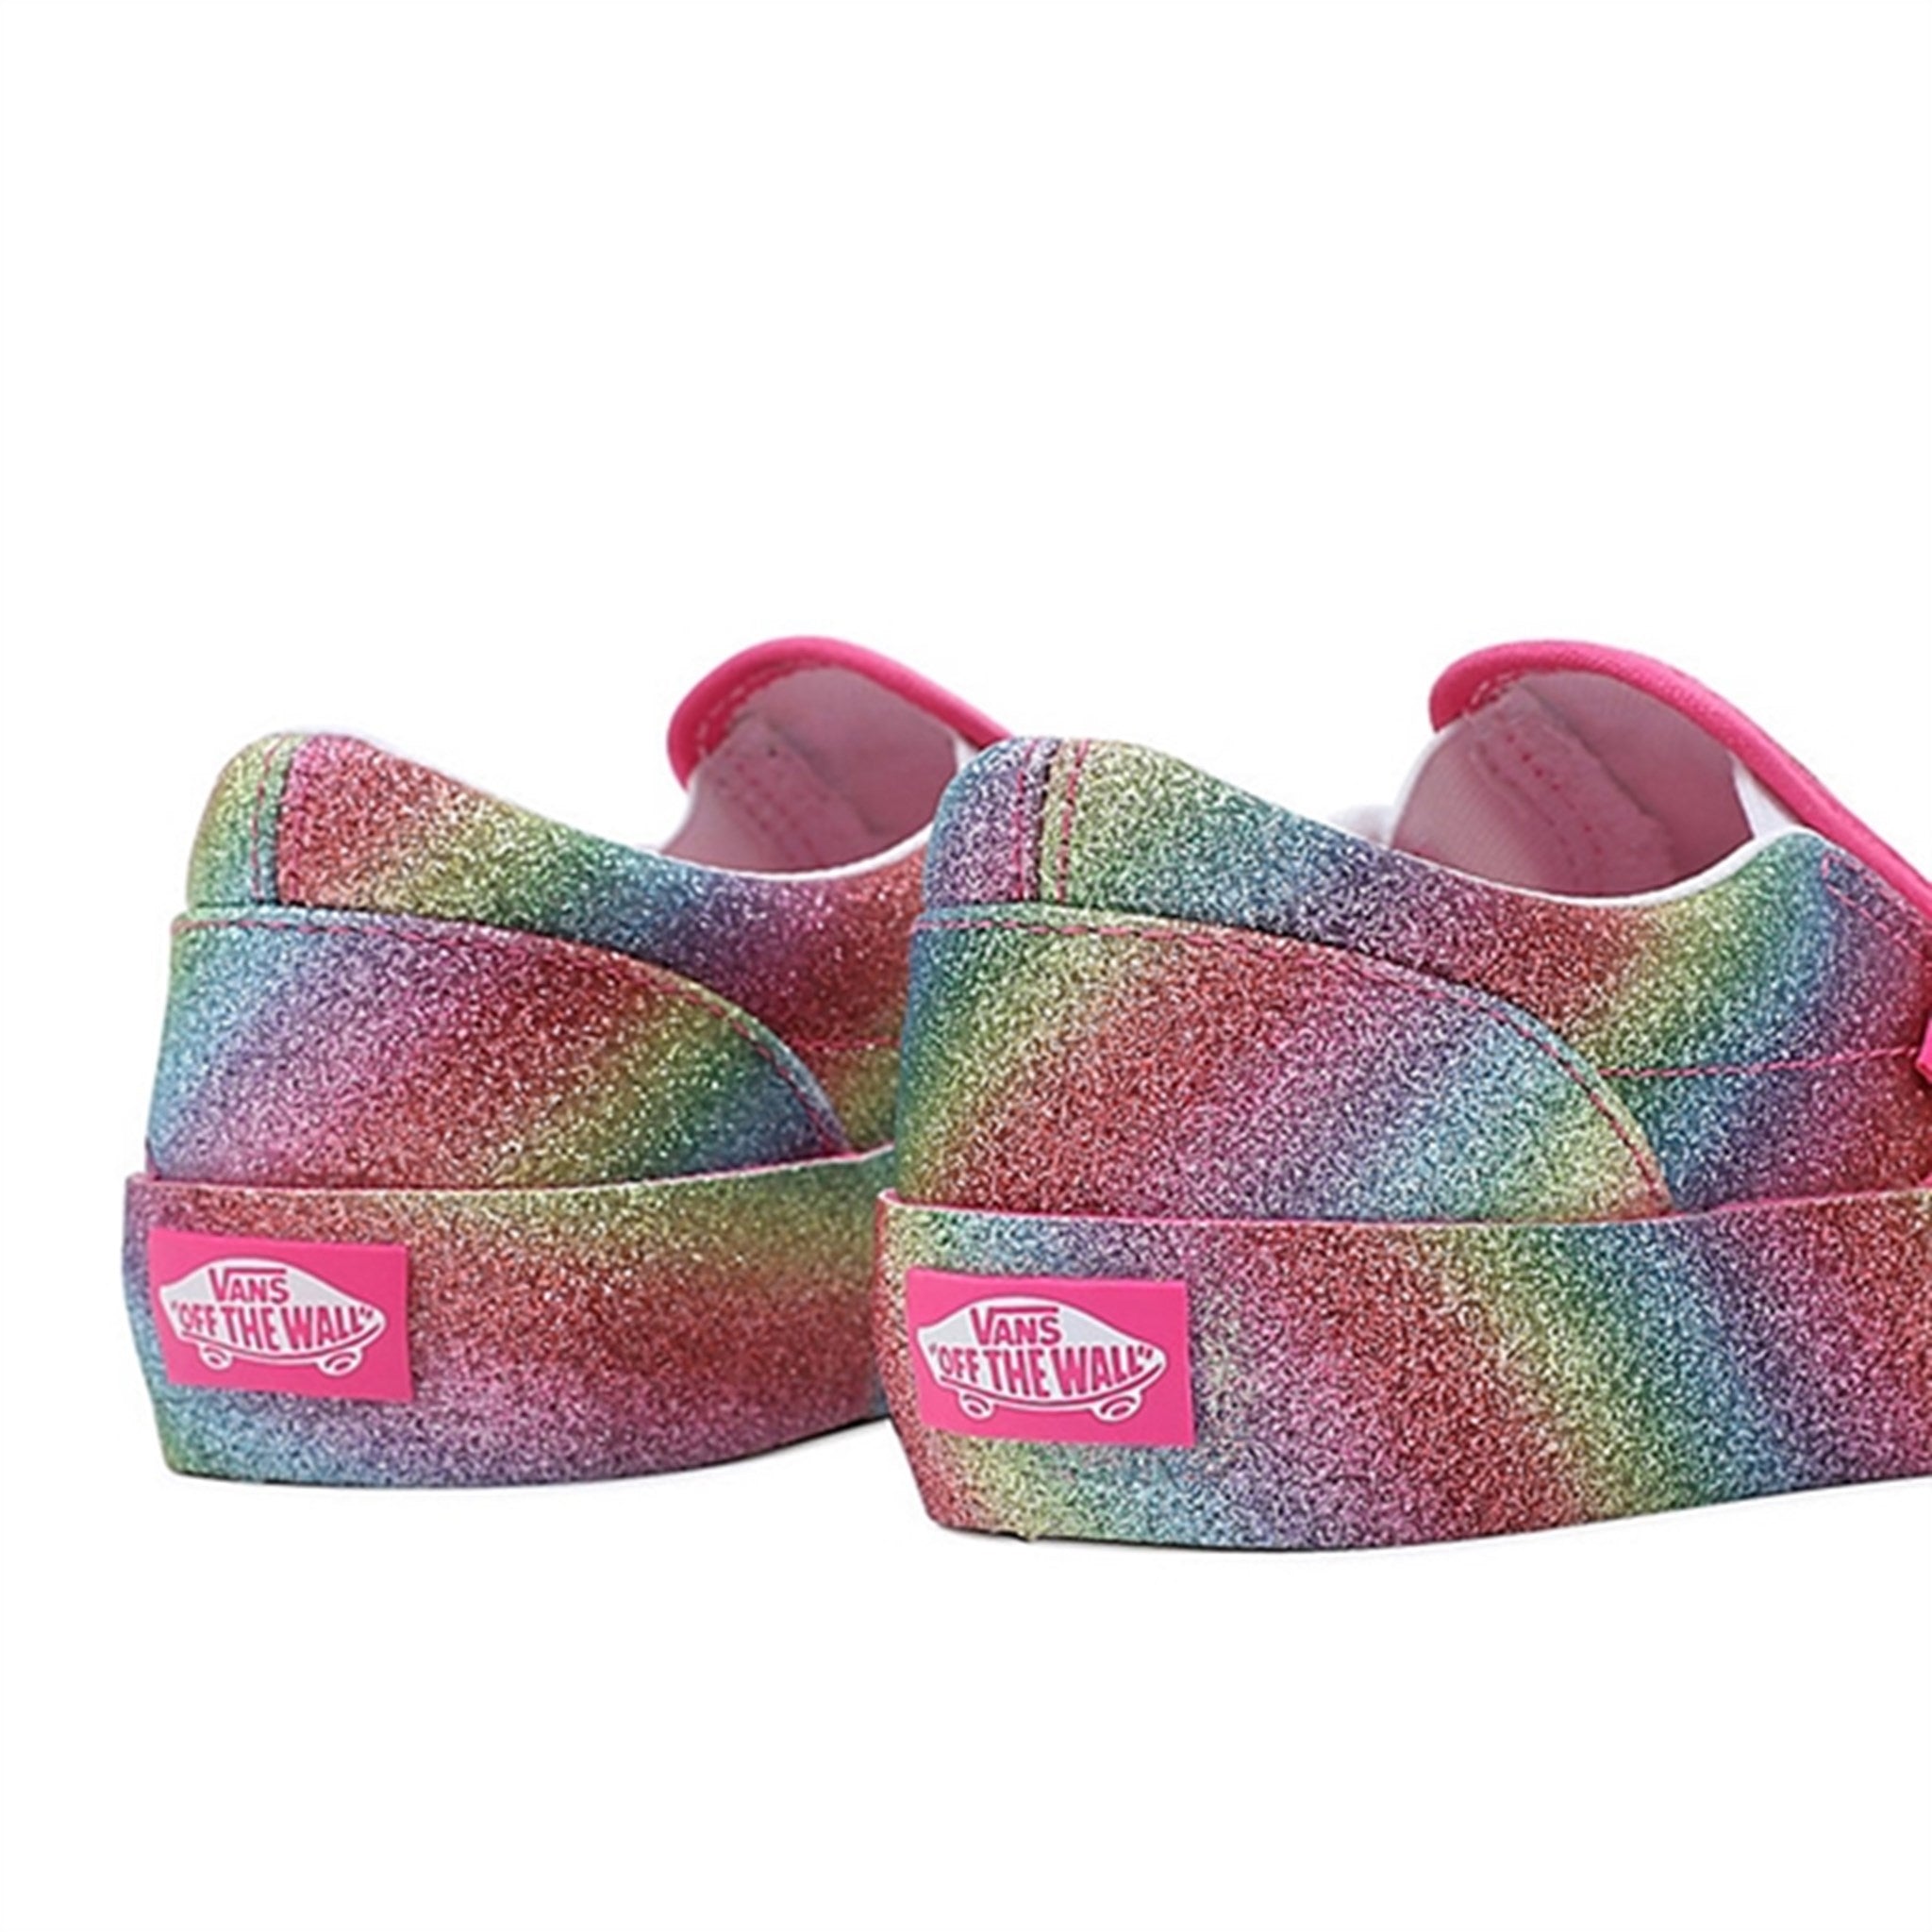 VANS UY Classic Slip-On Sneakers Glitter Rainglow Rainbow 6